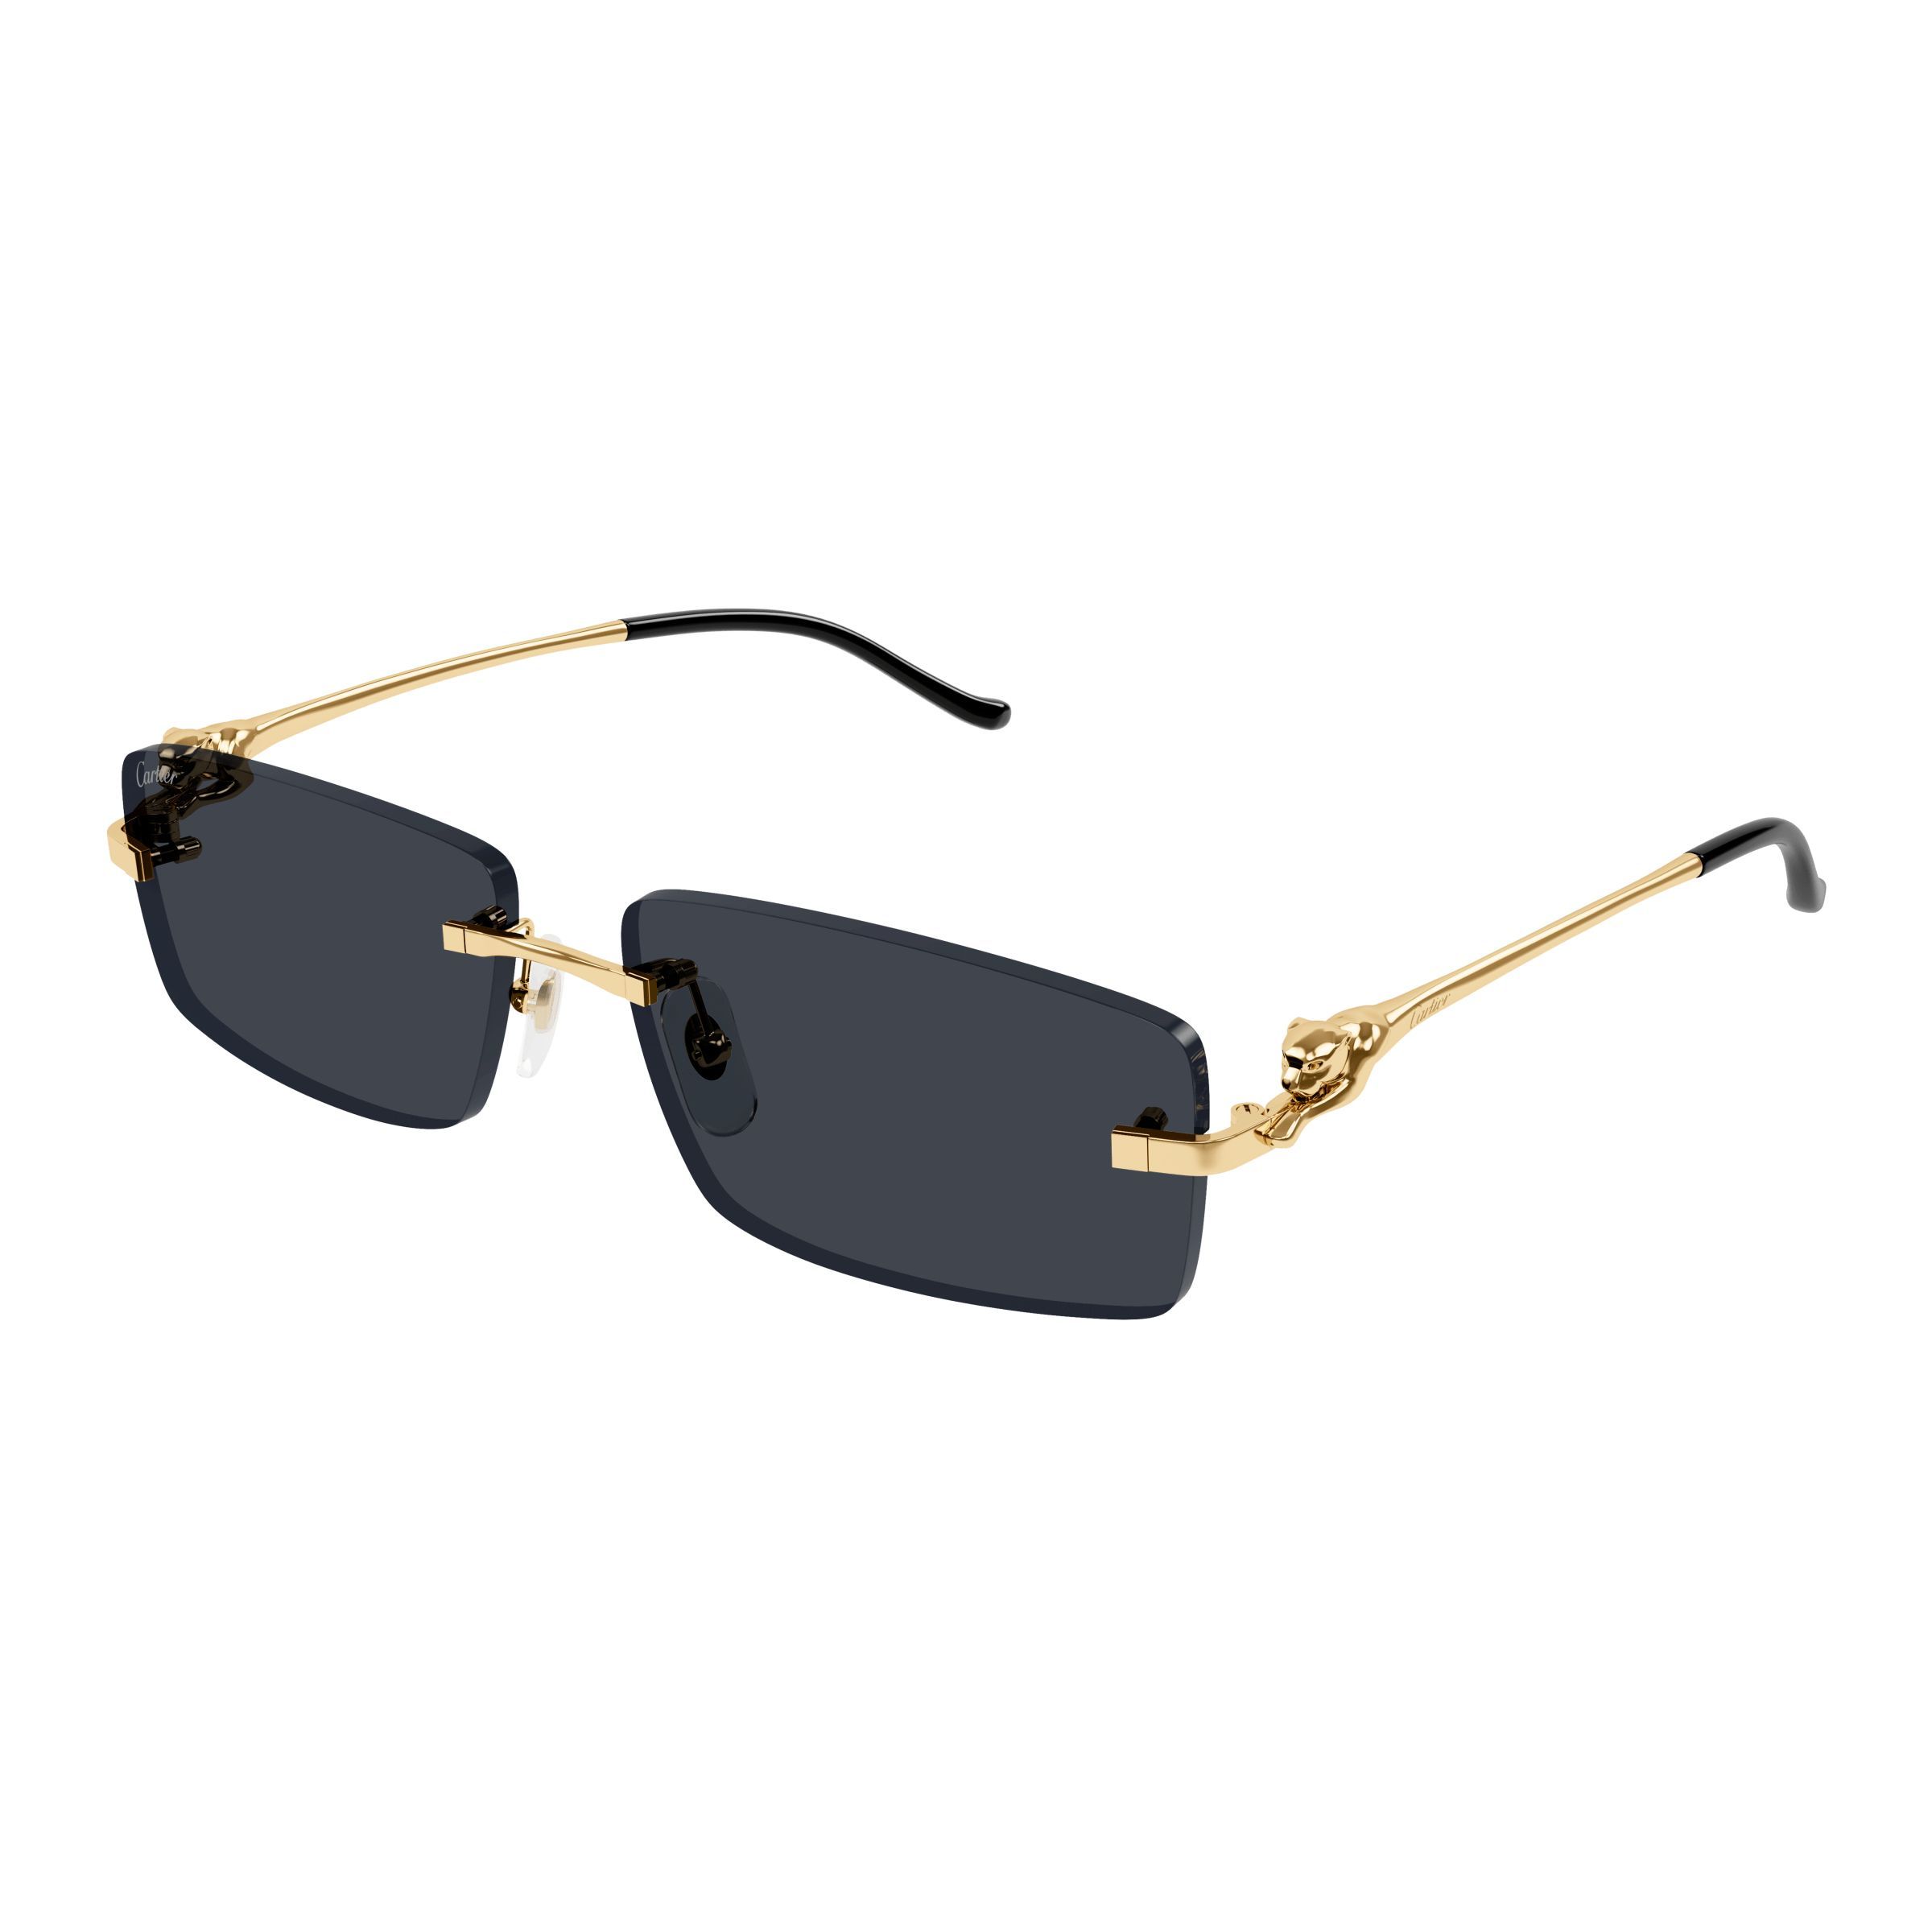 CT0430S Rectangle Sunglasses 001 - size 58